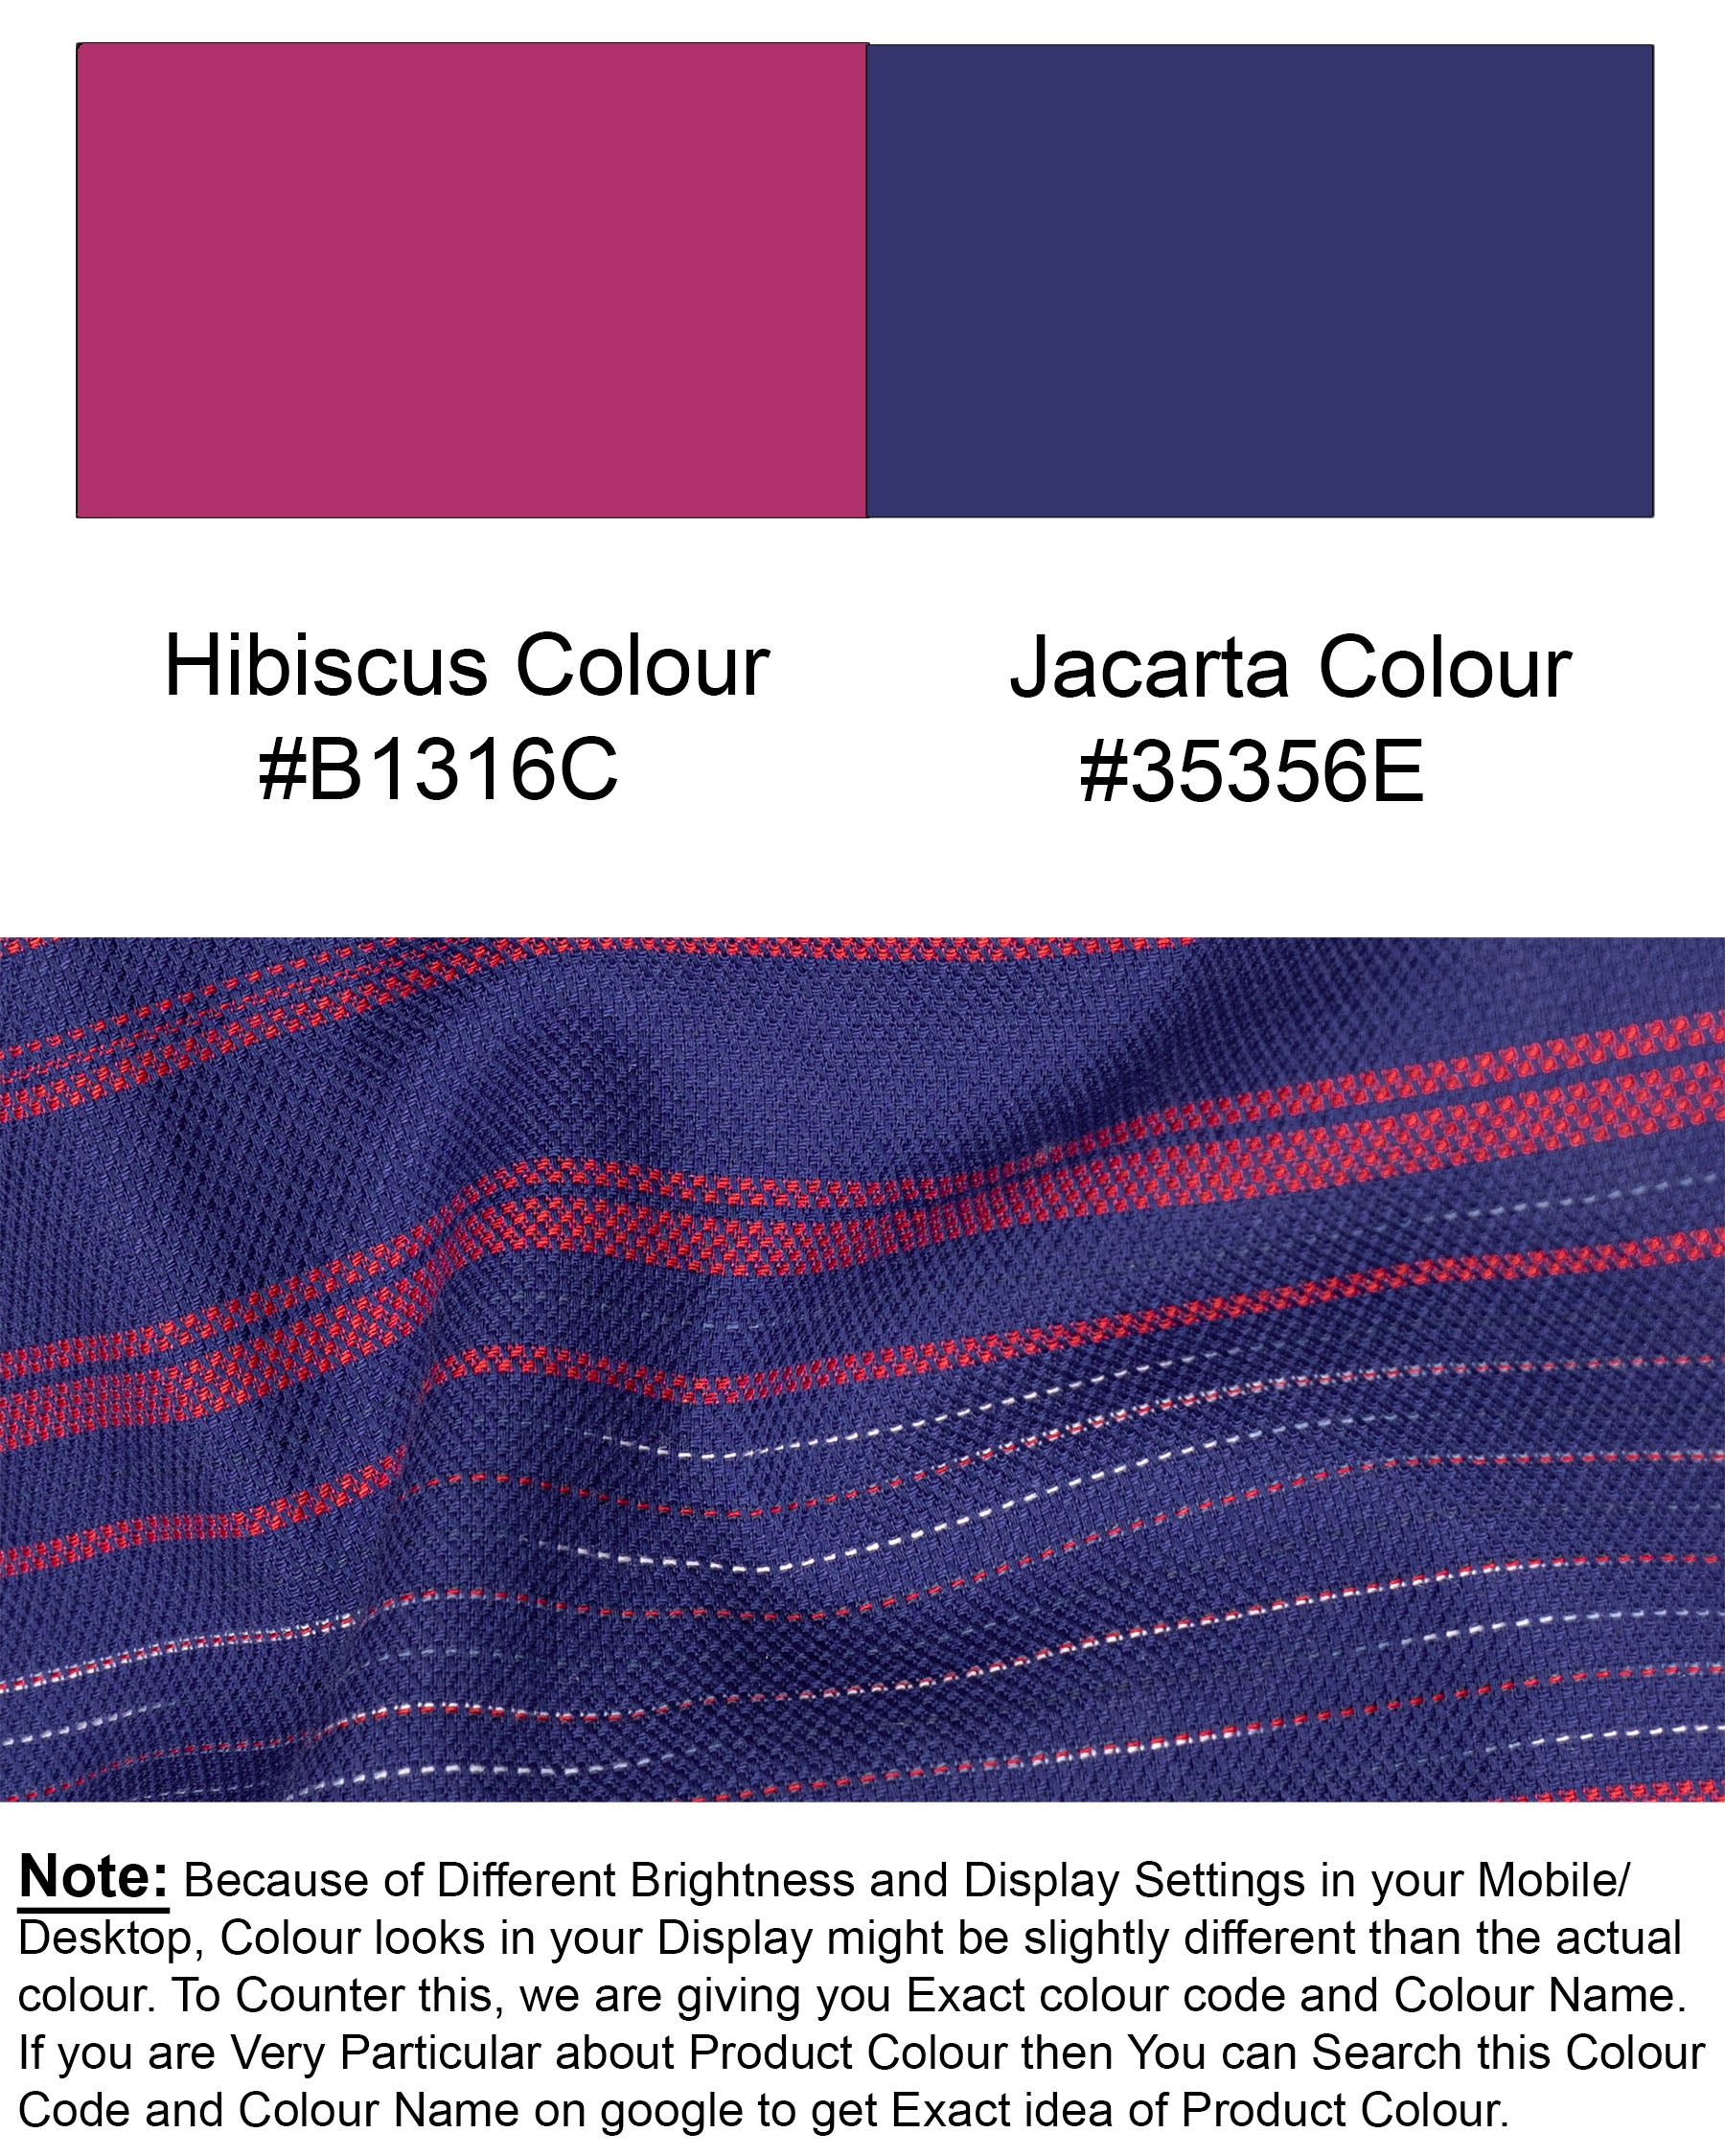 Jacarta Blue Striped Dobby Textured Premium Giza Cotton Shirt 6209-CA-MN-38, 6209-CA-MN-H-38, 6209-CA-MN-39, 6209-CA-MN-H-39, 6209-CA-MN-40, 6209-CA-MN-H-40, 6209-CA-MN-42, 6209-CA-MN-H-42, 6209-CA-MN-44, 6209-CA-MN-H-44, 6209-CA-MN-46, 6209-CA-MN-H-46, 6209-CA-MN-48, 6209-CA-MN-H-48, 6209-CA-MN-50, 6209-CA-MN-H-50, 6209-CA-MN-52, 6209-CA-MN-H-52